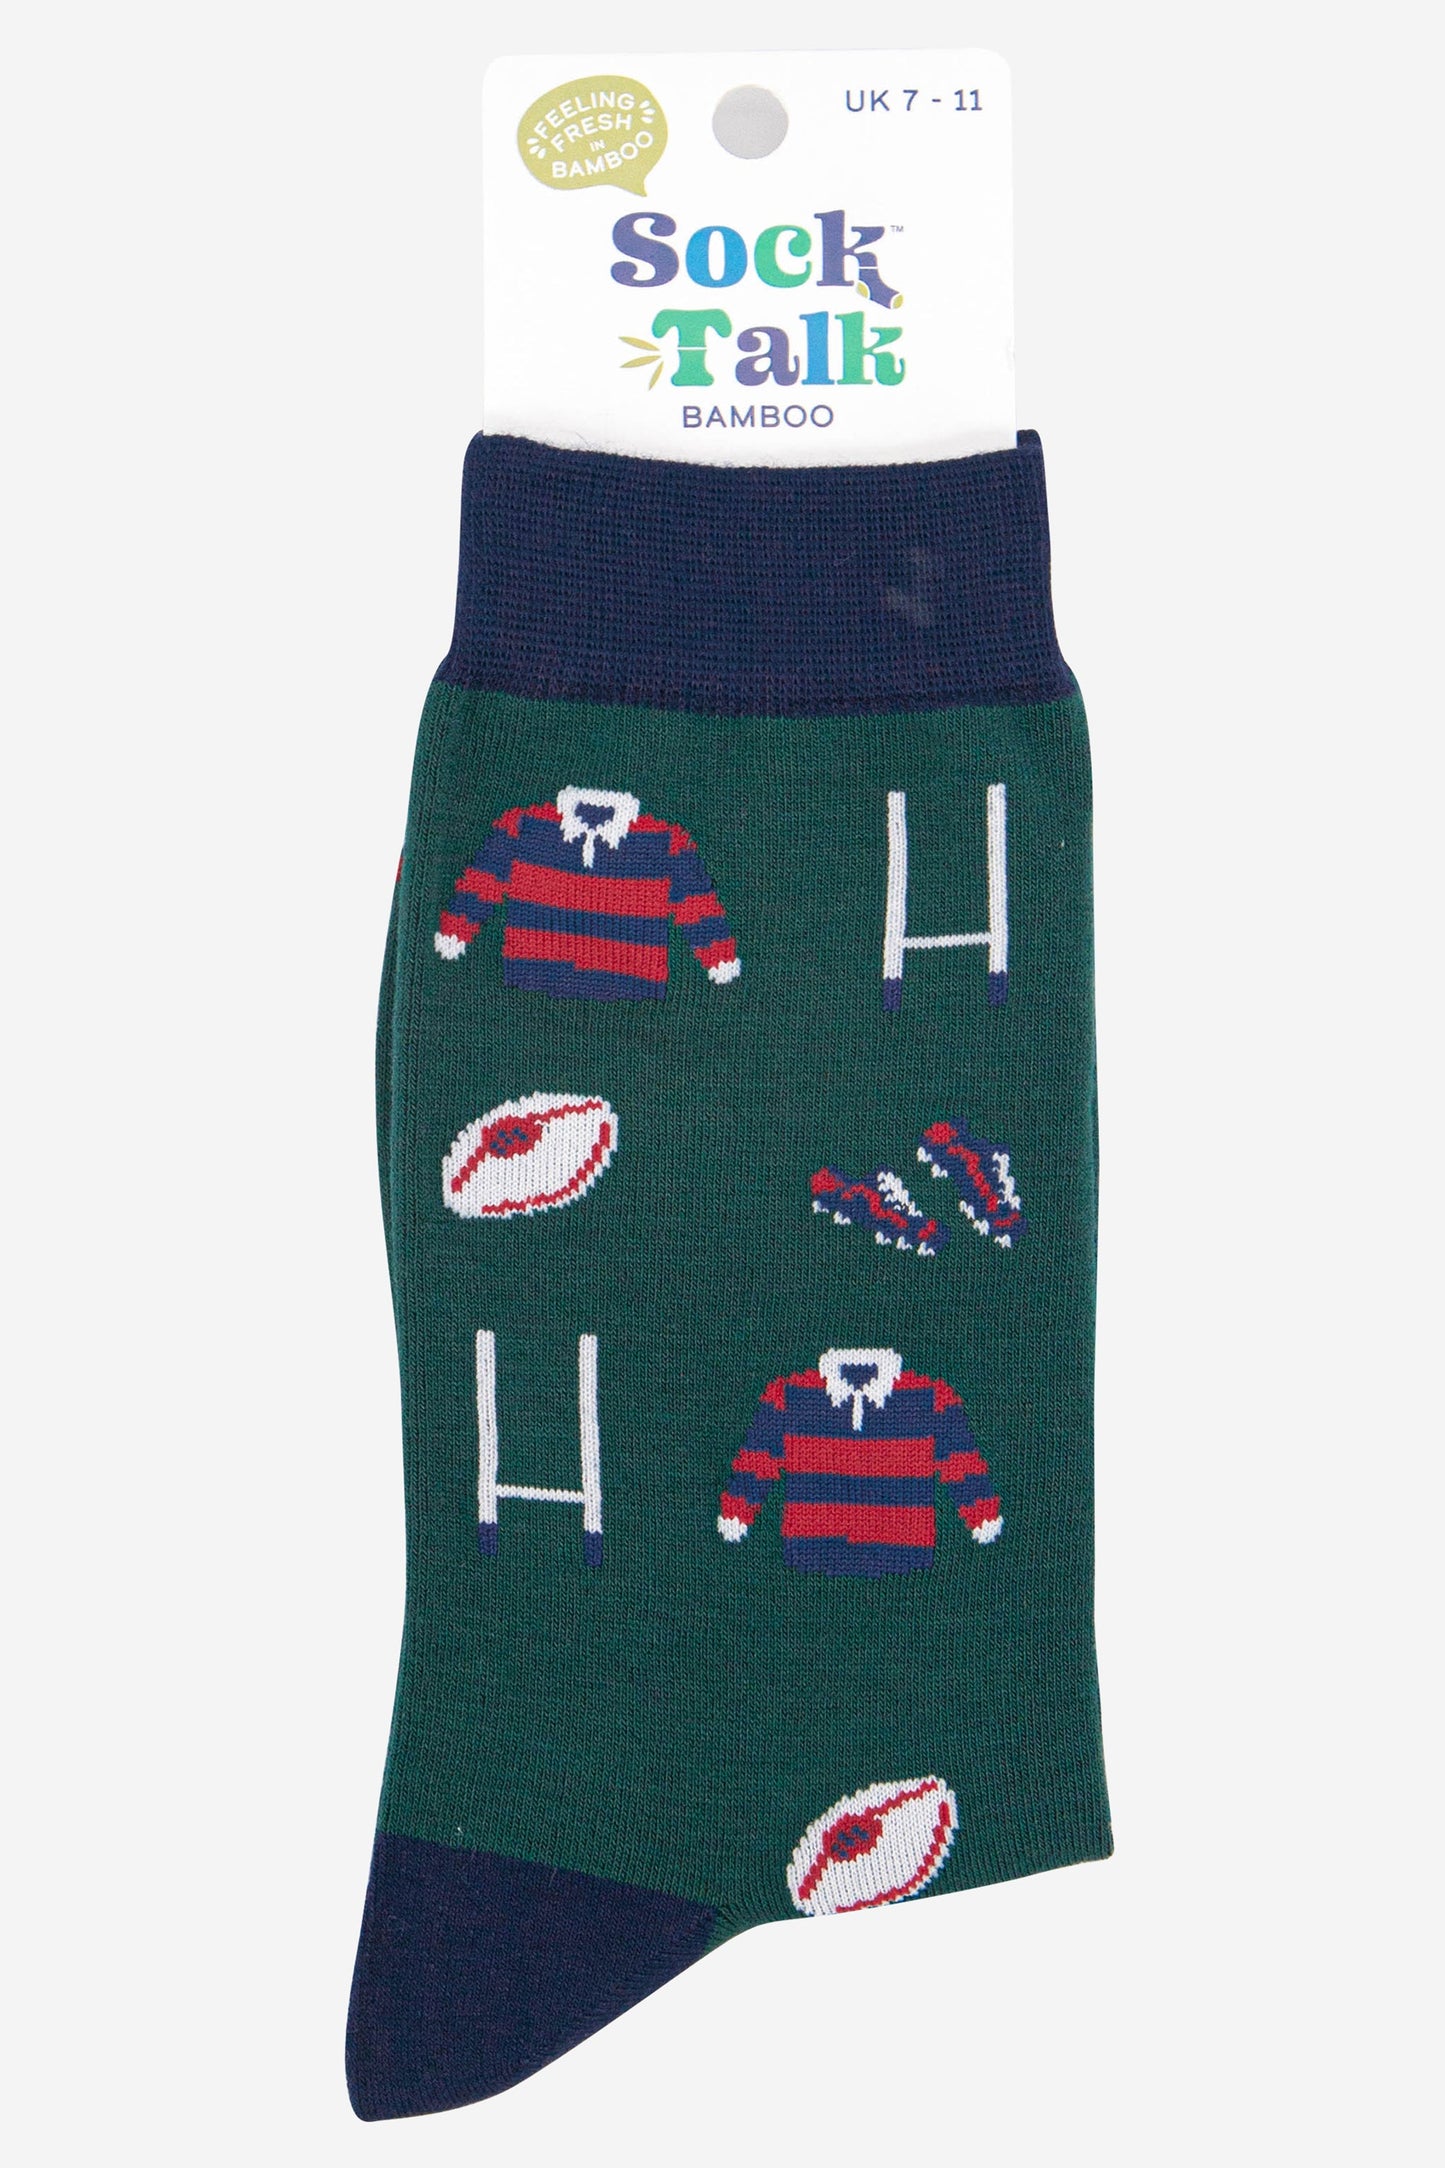 mens rugby team bamboo dress socks uk size 7-11